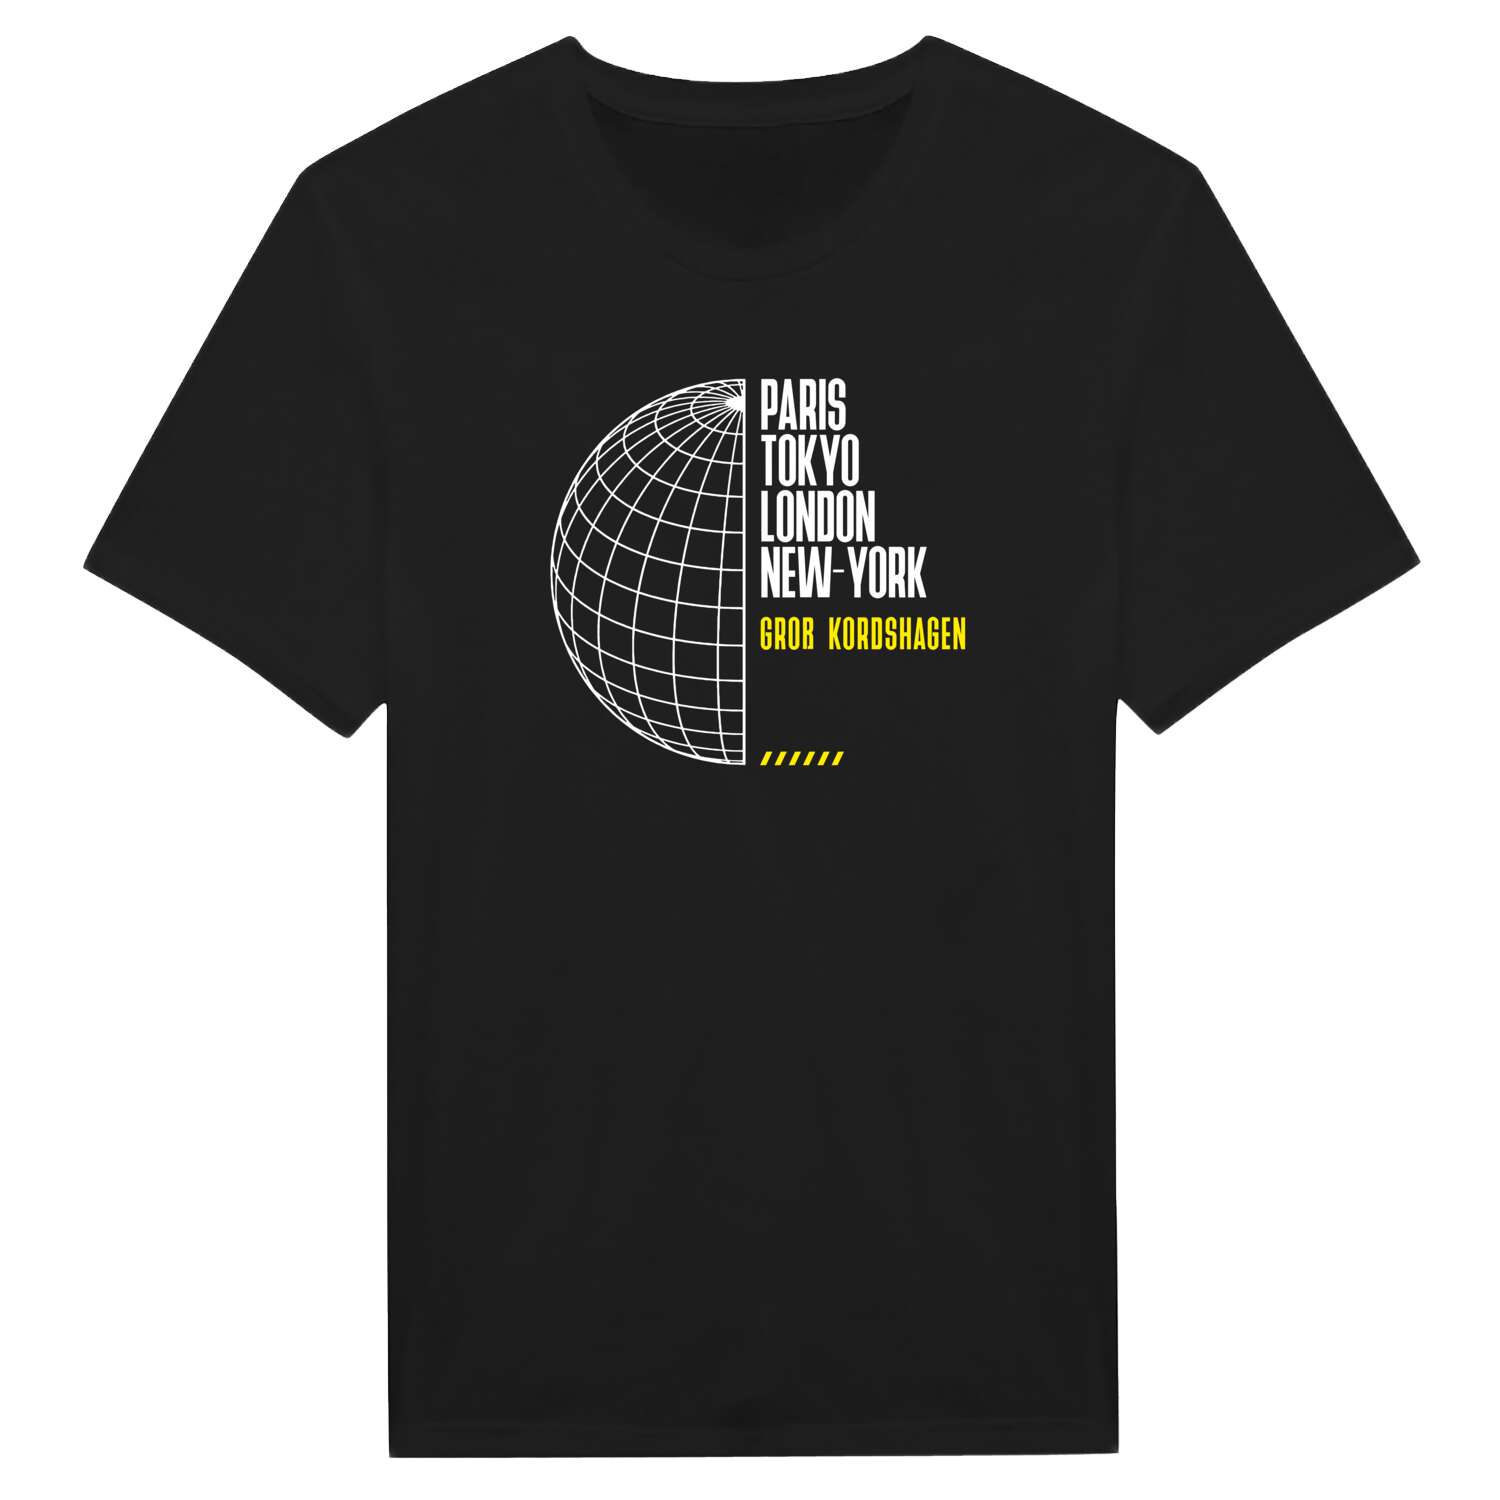 Groß Kordshagen T-Shirt »Paris Tokyo London«